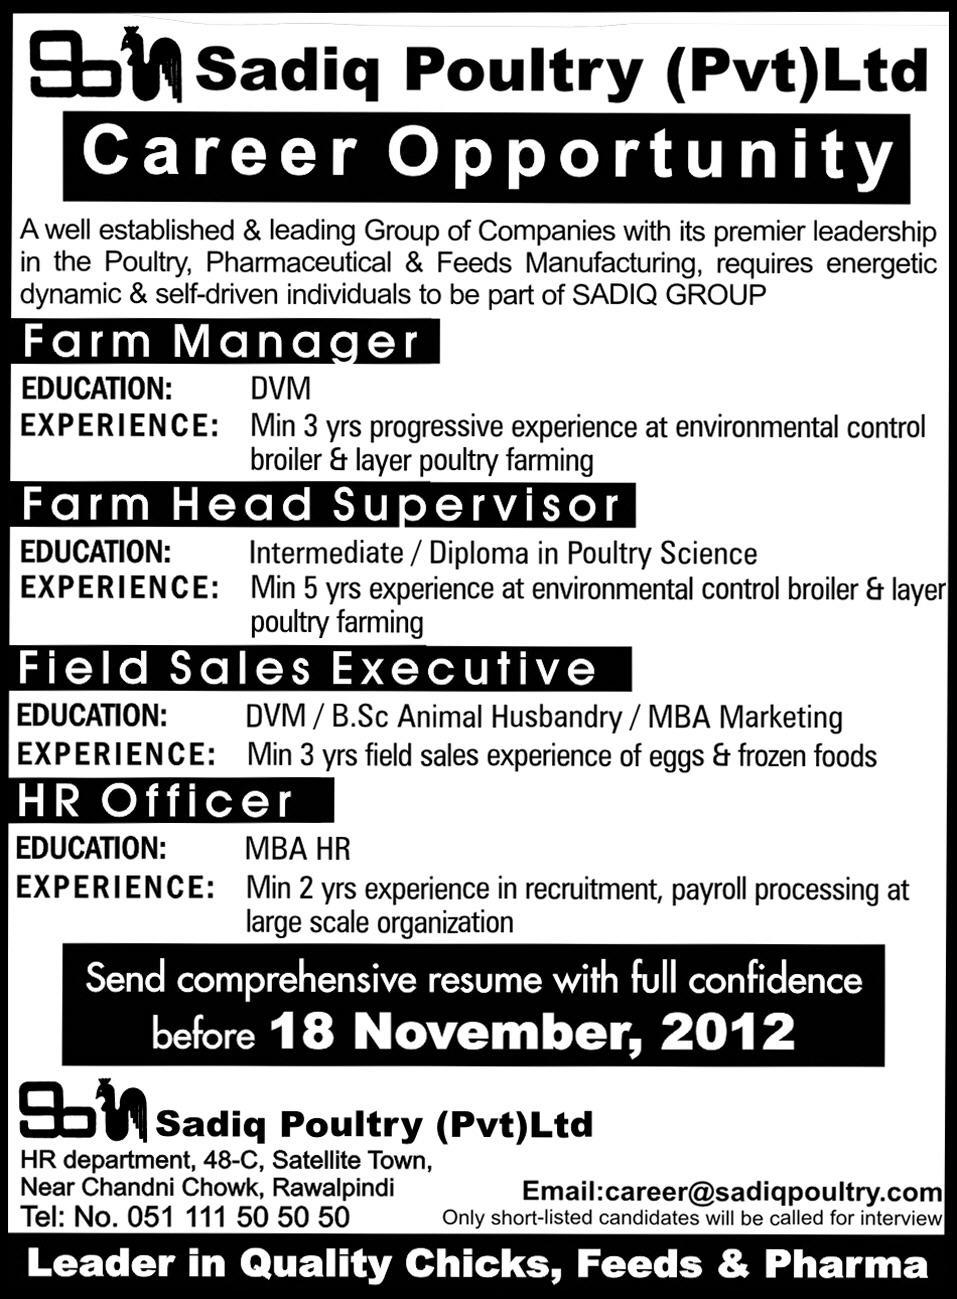 Sadiq Poultry Jobs for Manager, Supervisor, Sales & HR